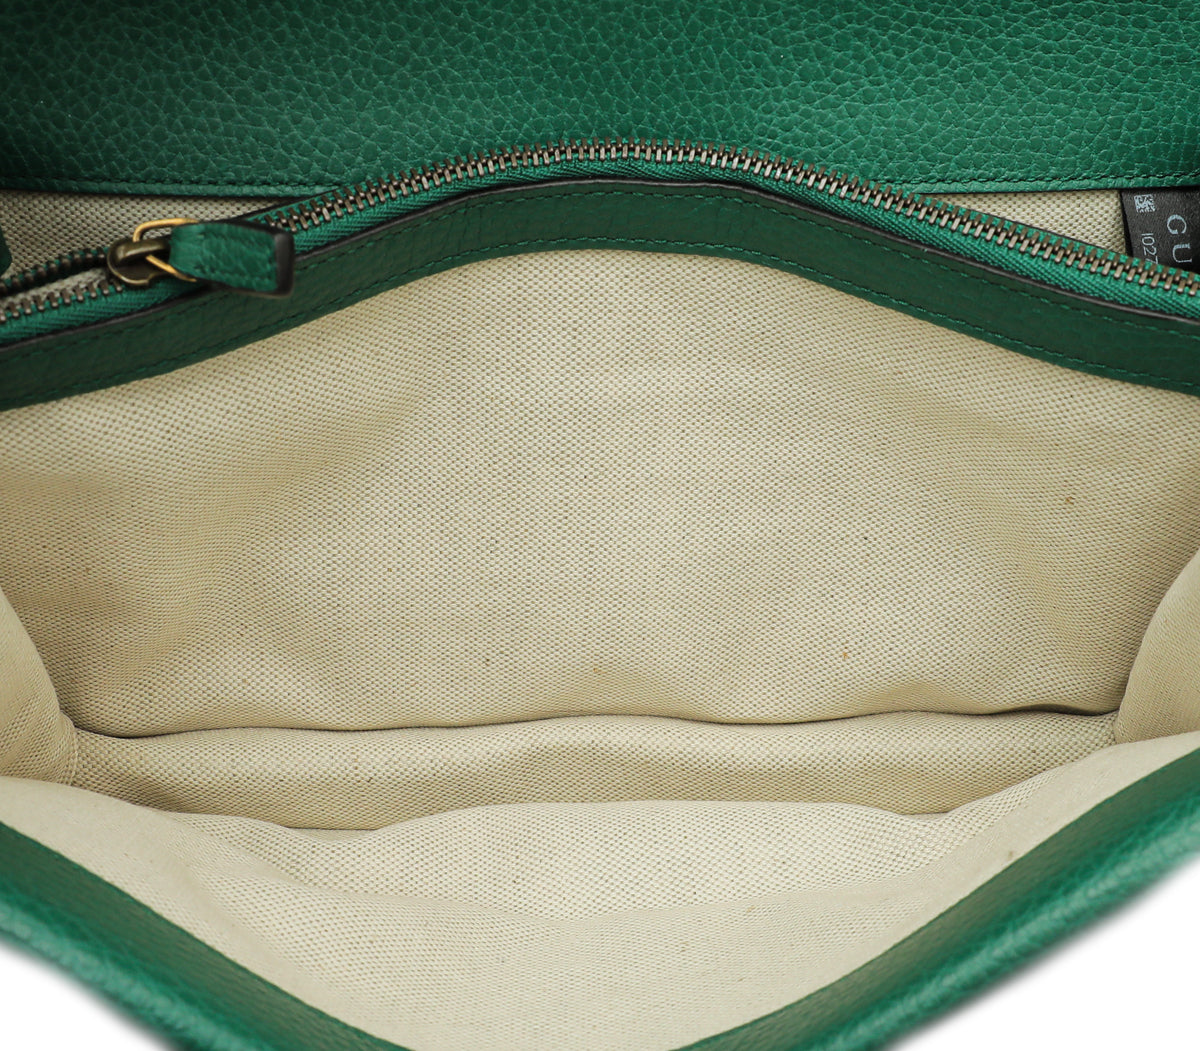 Gucci Green Dionysus Small Bag